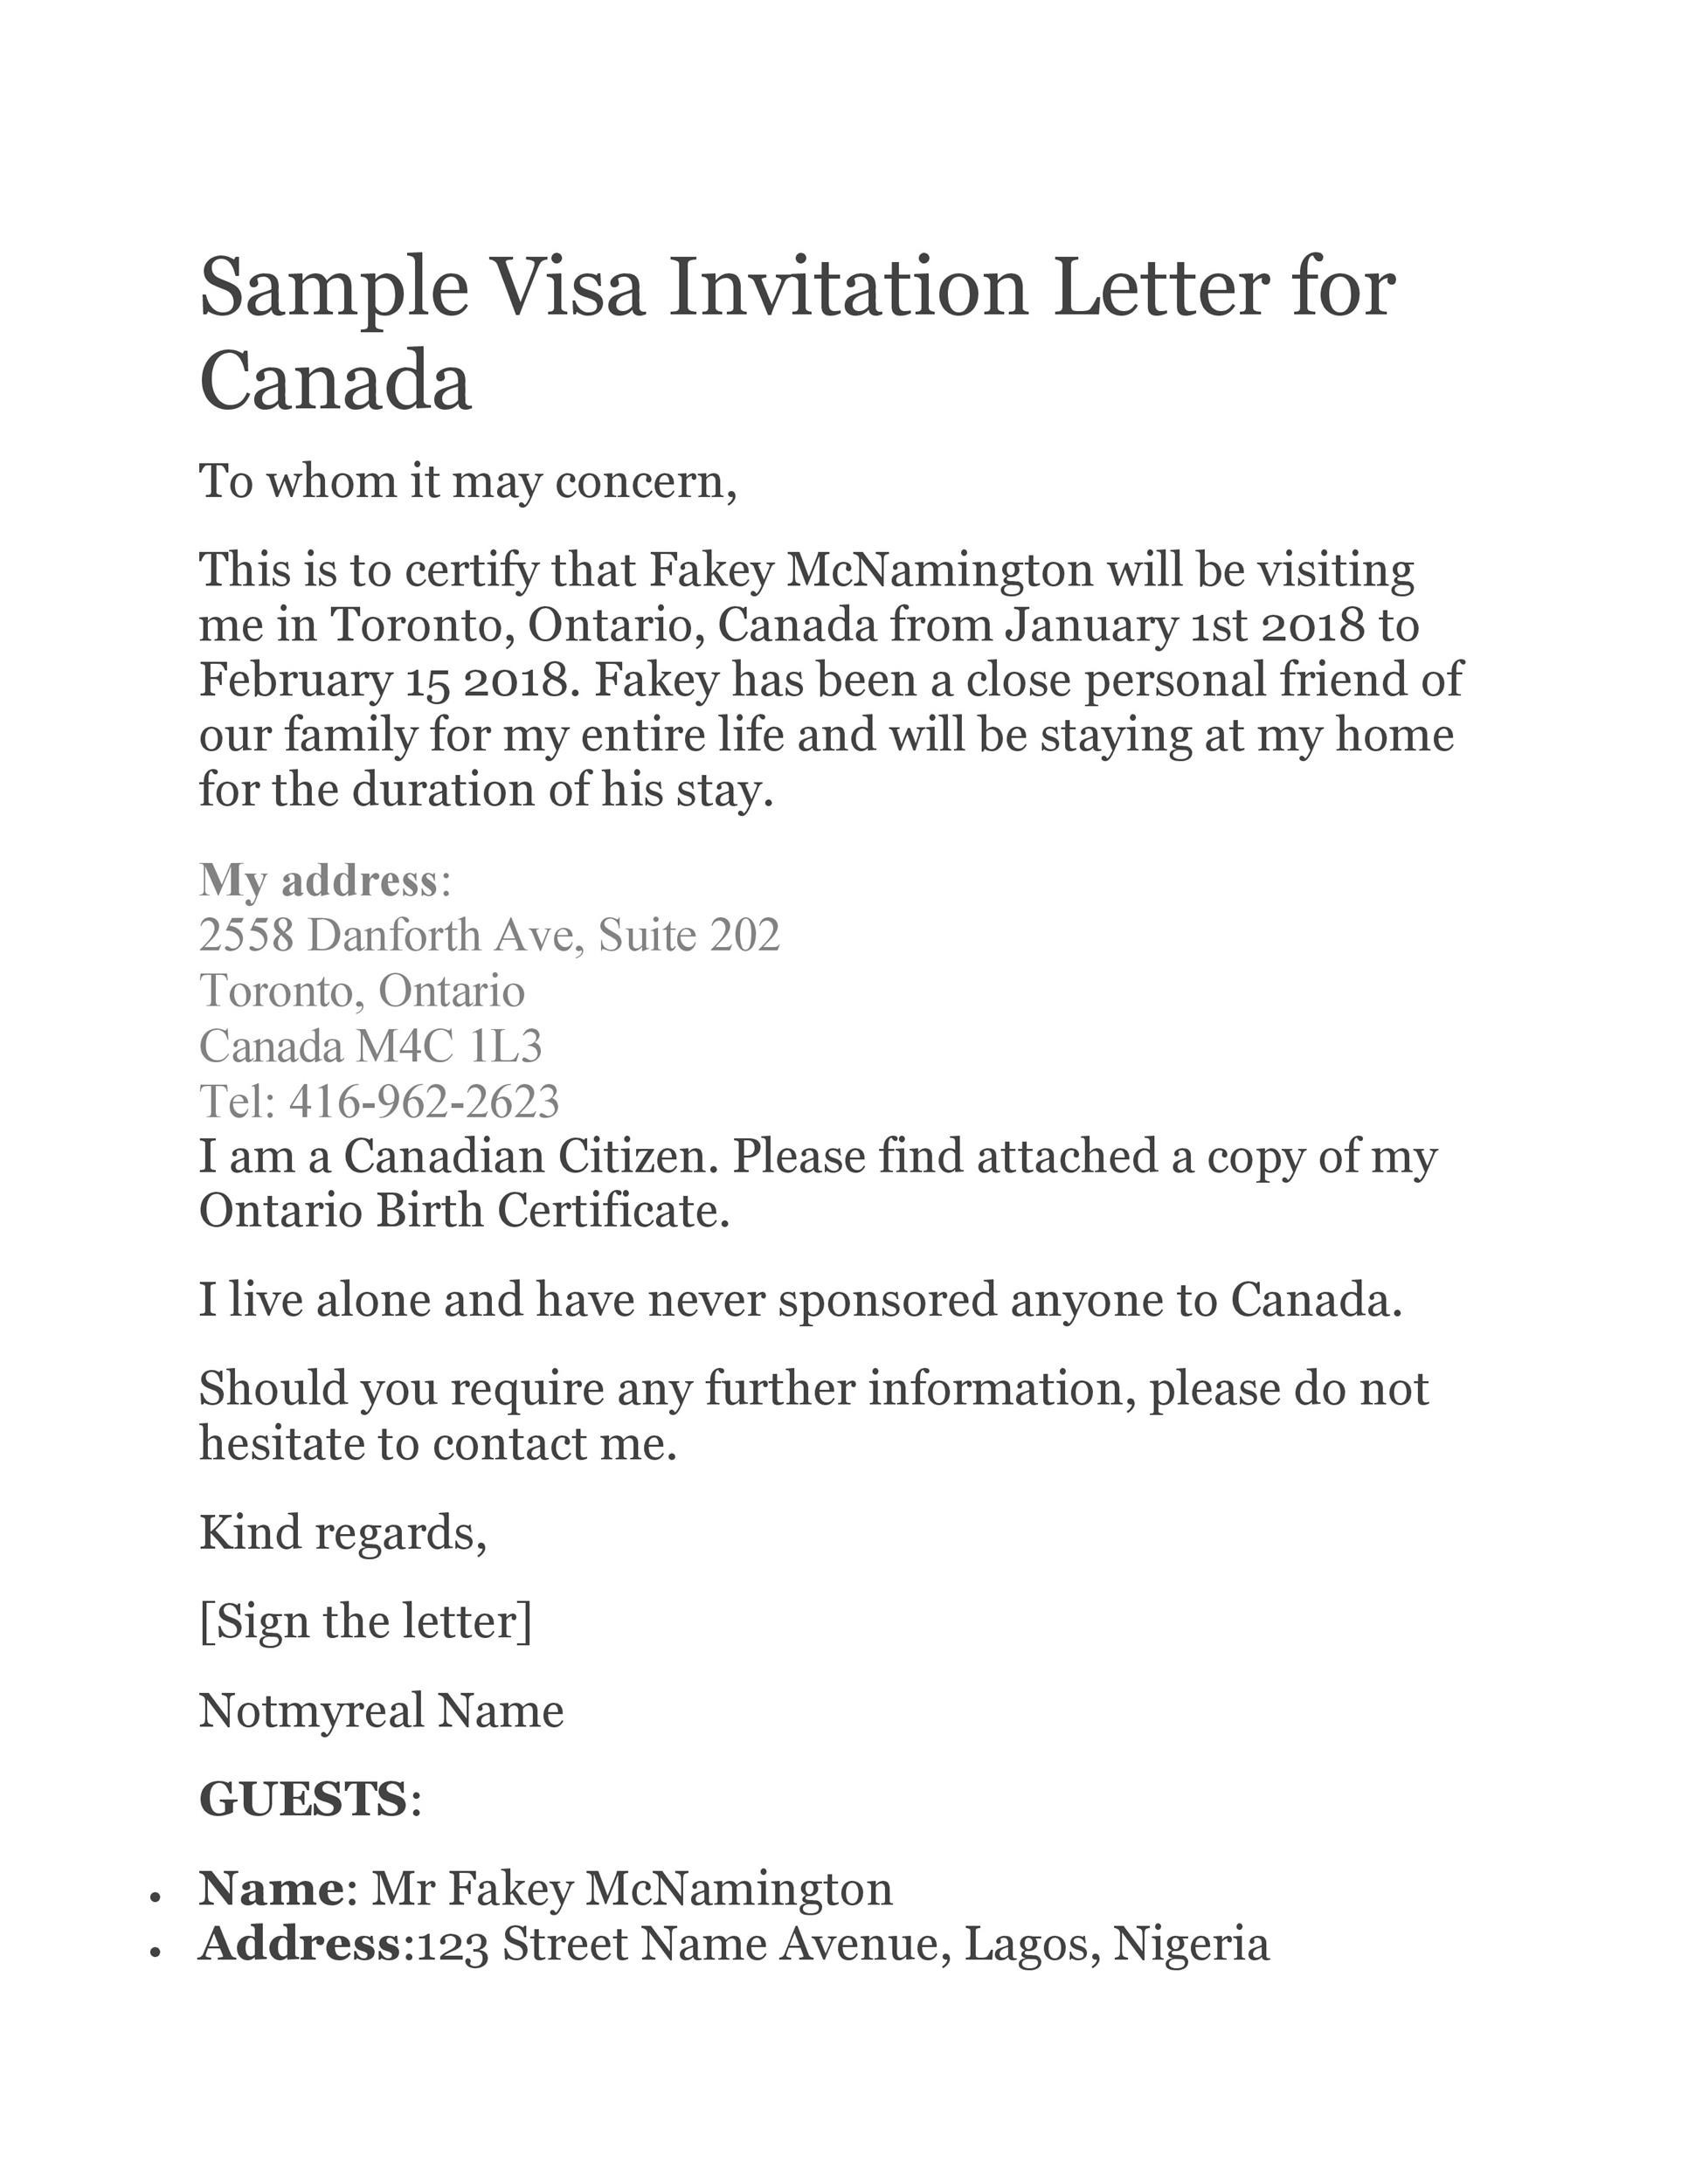 50 Best Invitation Letters (for Visa General) ᐅ TemplateLab